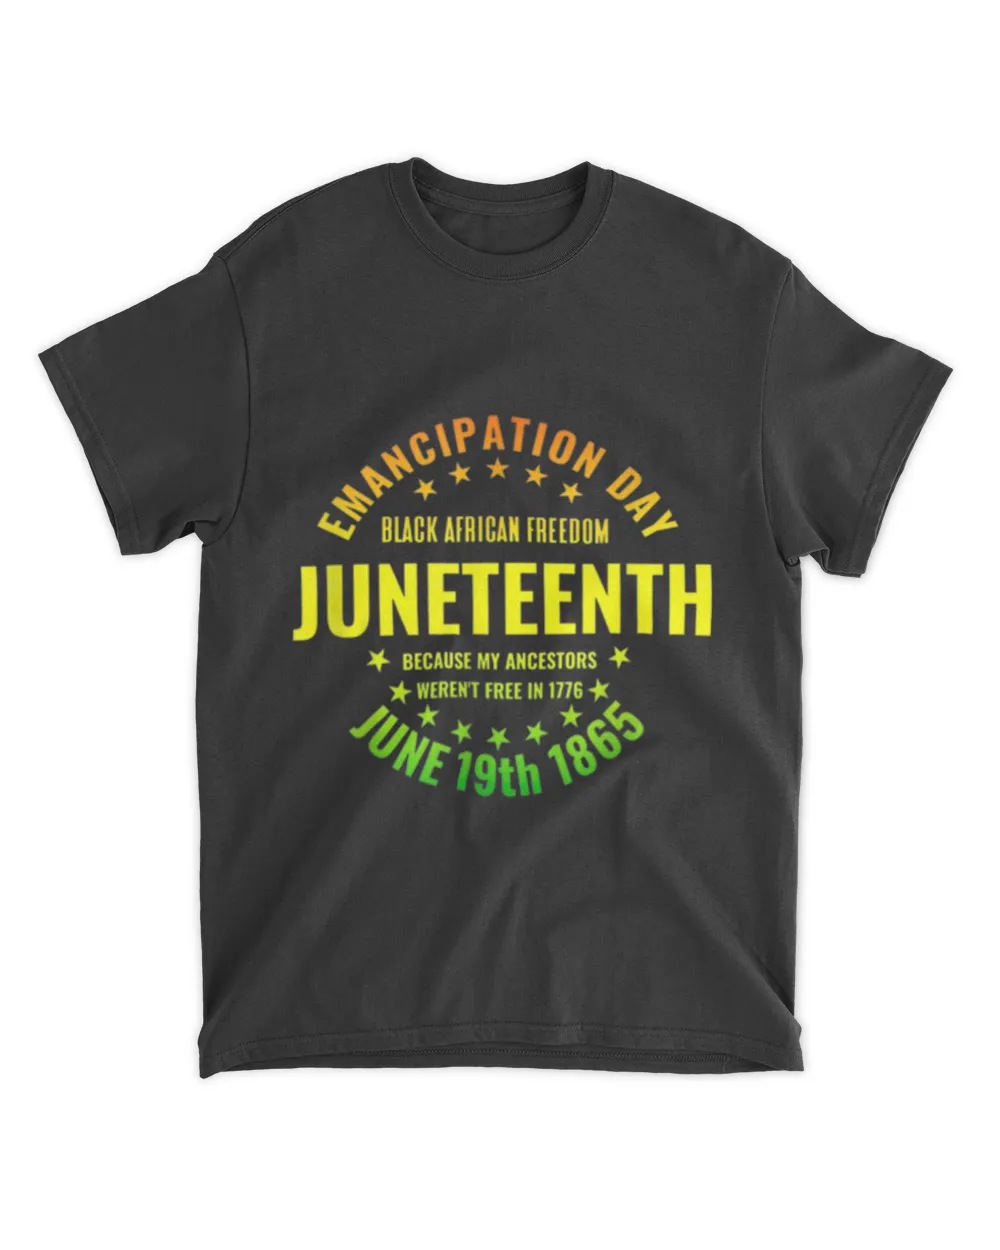 Juneteenth Emancipation African American Freedom Black Pride T-Shirt tee